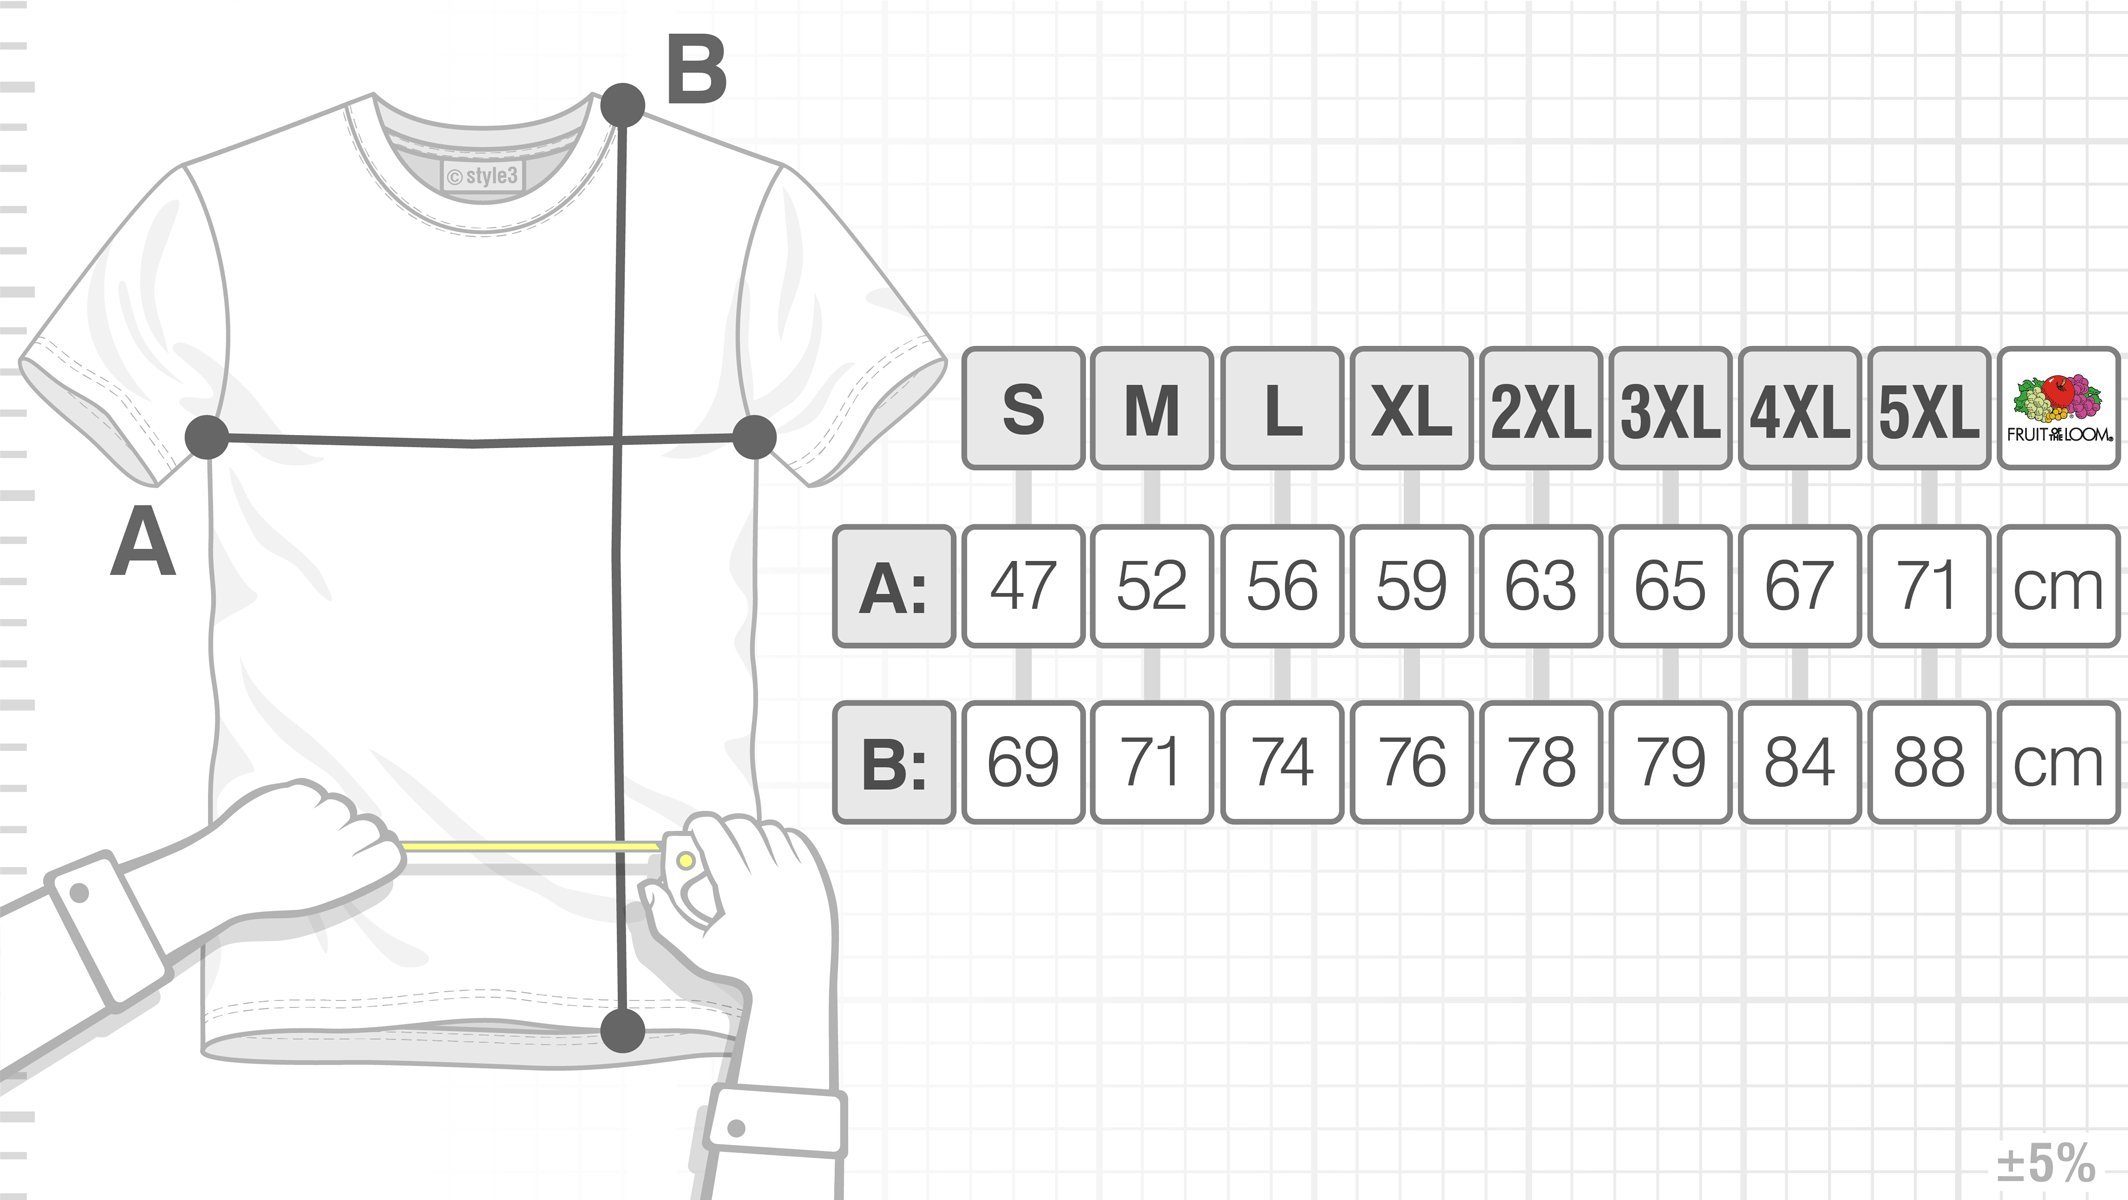 cooper Print-Shirt Big TV meliert T-Shirt Monitor Sheldon Testbild grau style3 Roboter Herren theory Bang Robot